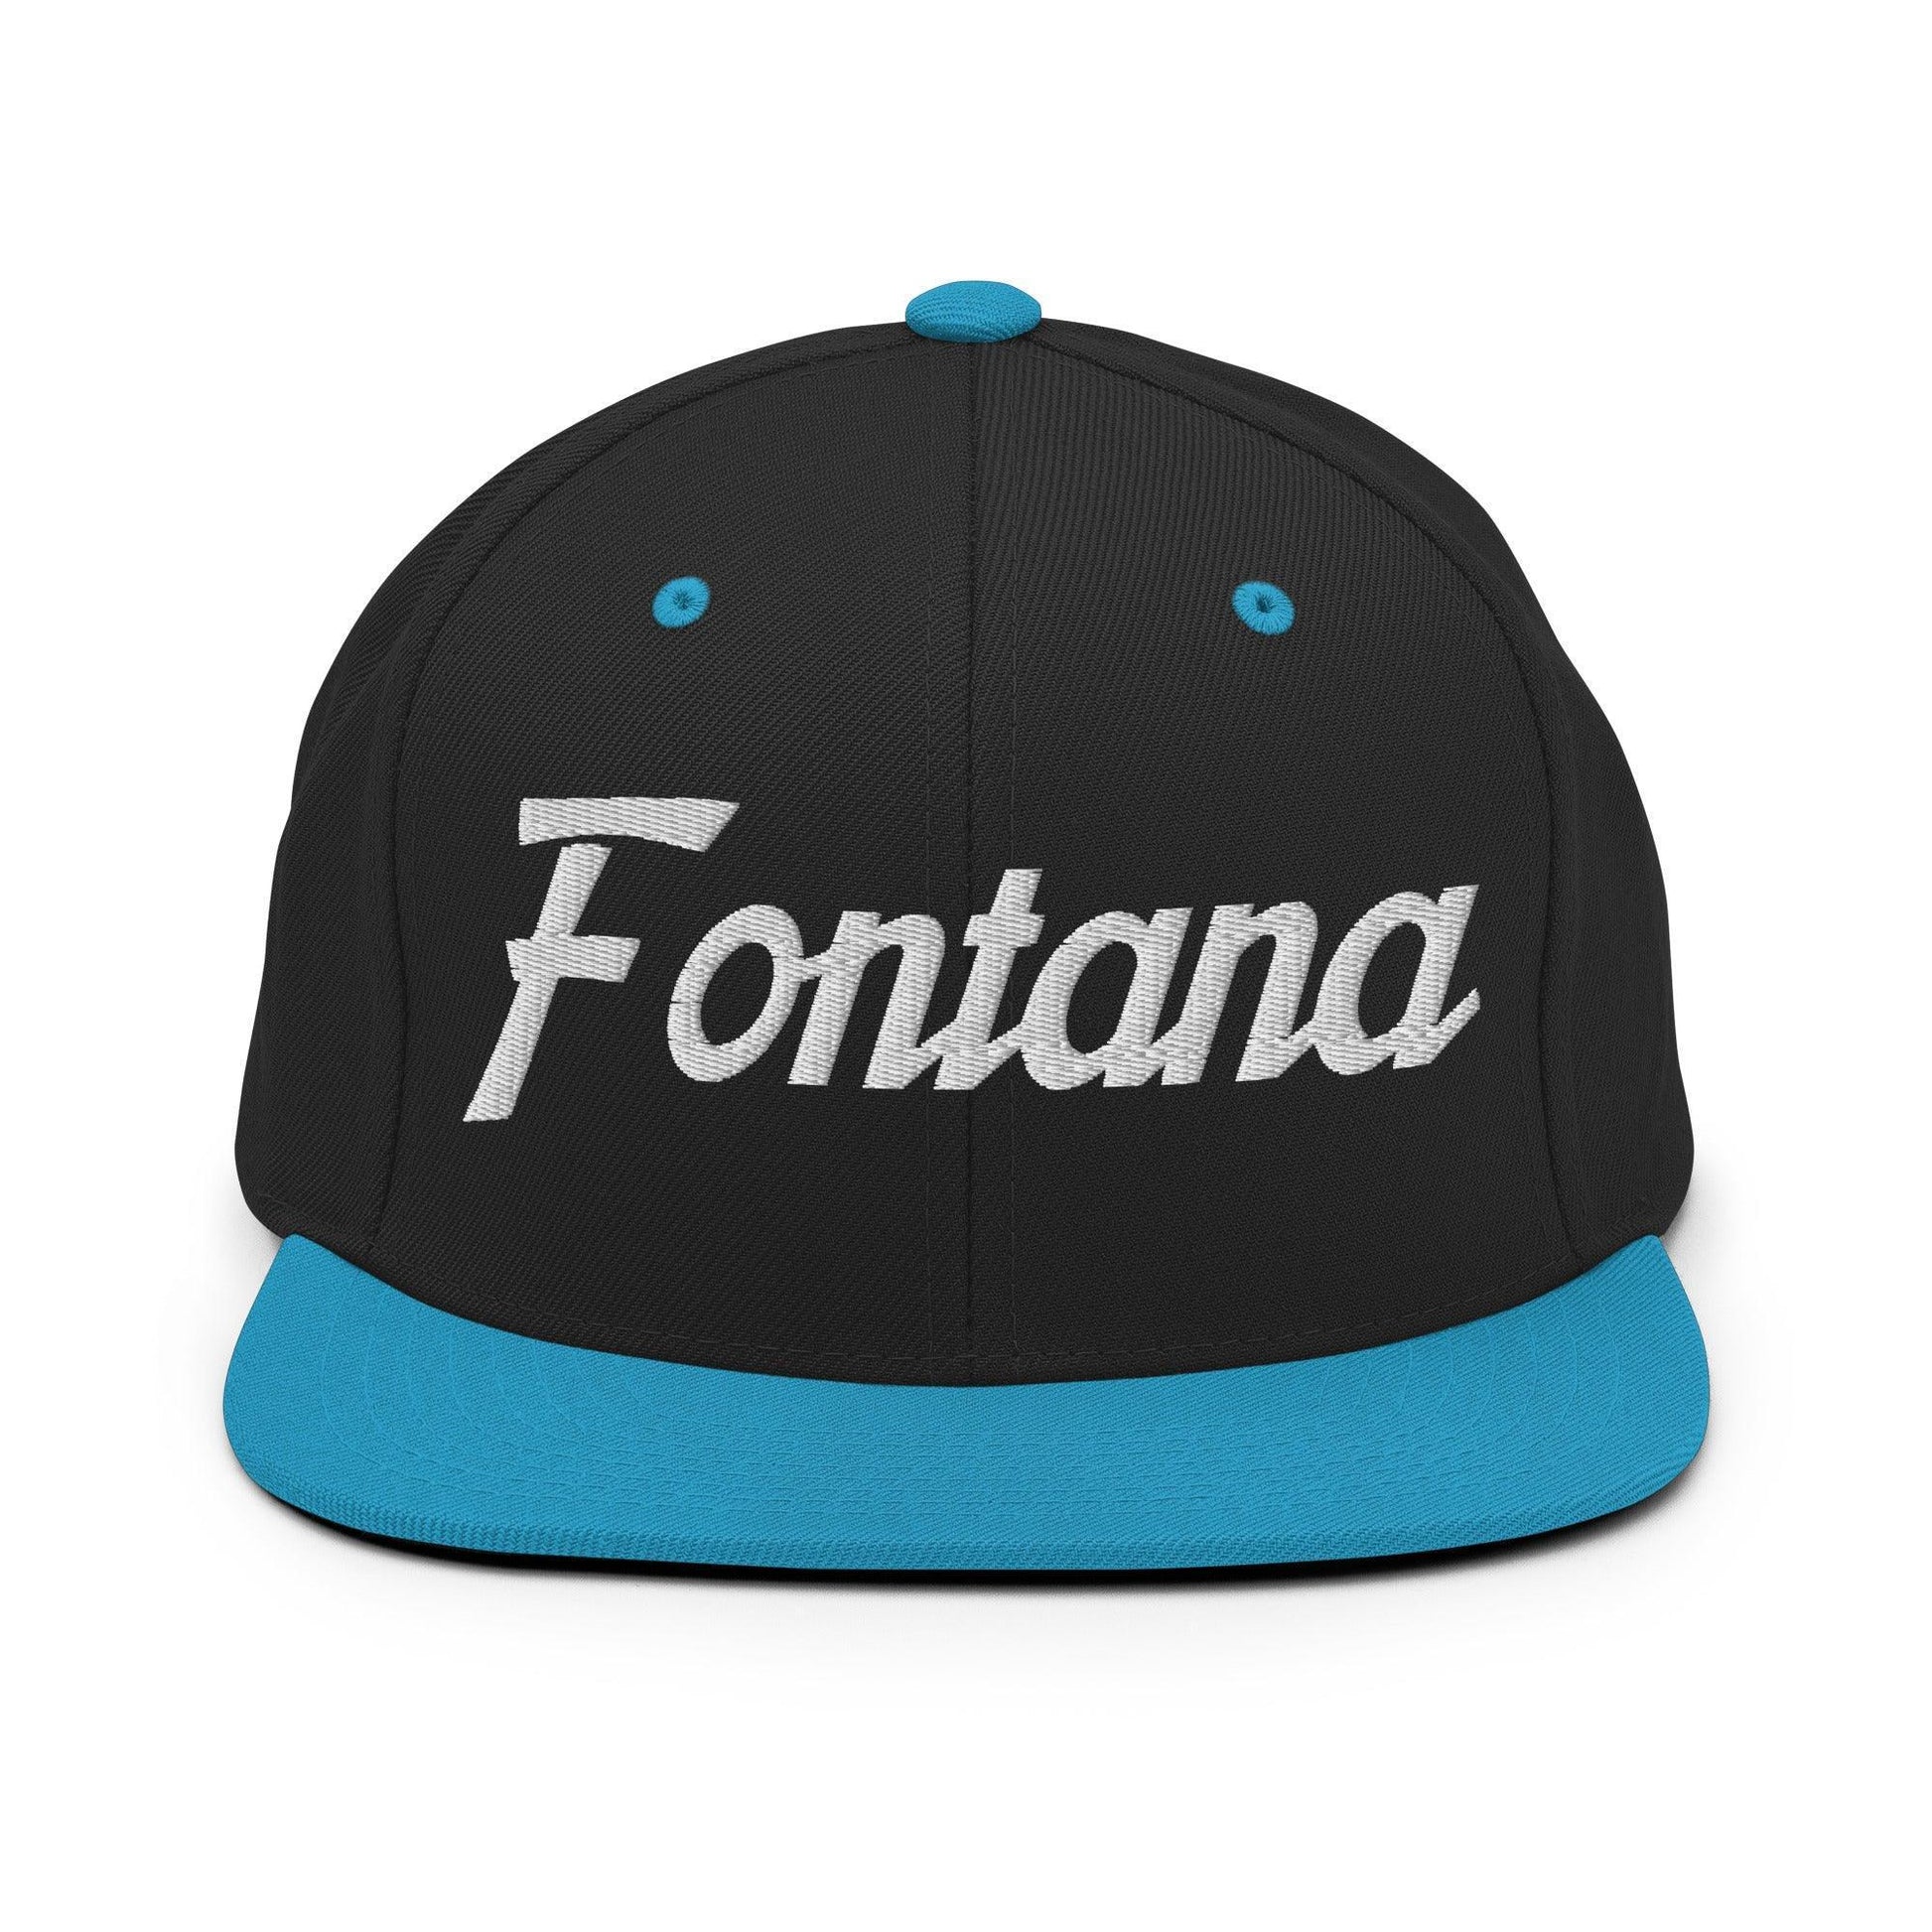 Fontana Script Snapback Hat Black/ Teal